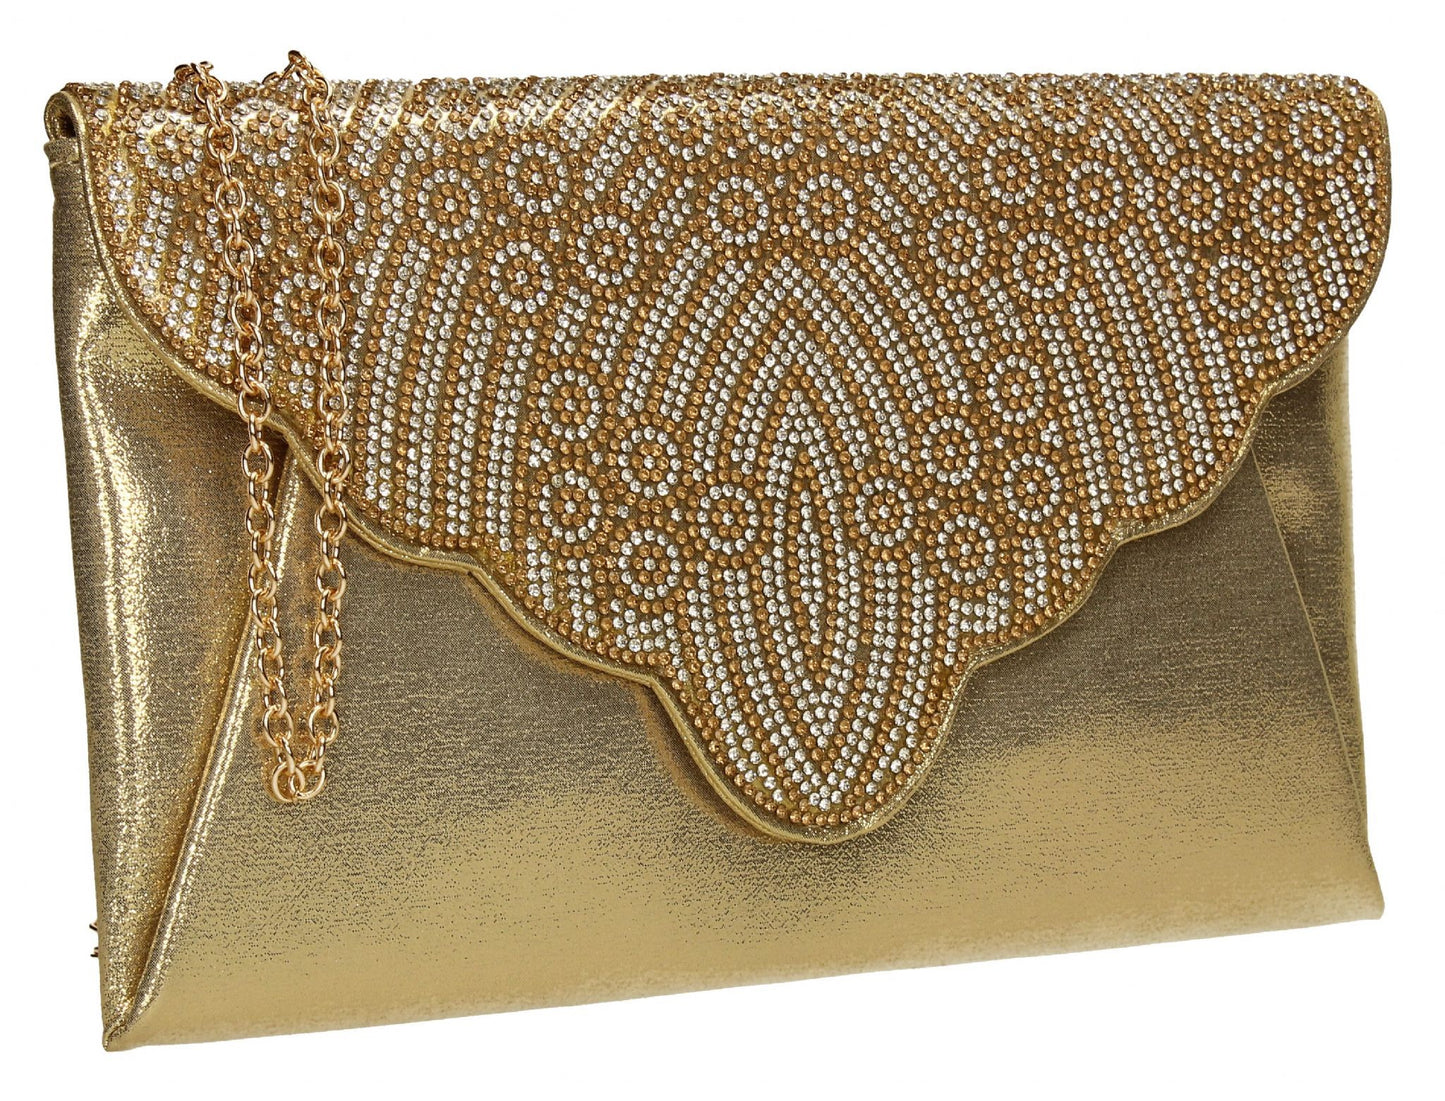 SWANKYSWANS Selina Clutch Bag Gold Cute Cheap Clutch Bag For Weddings School and Work